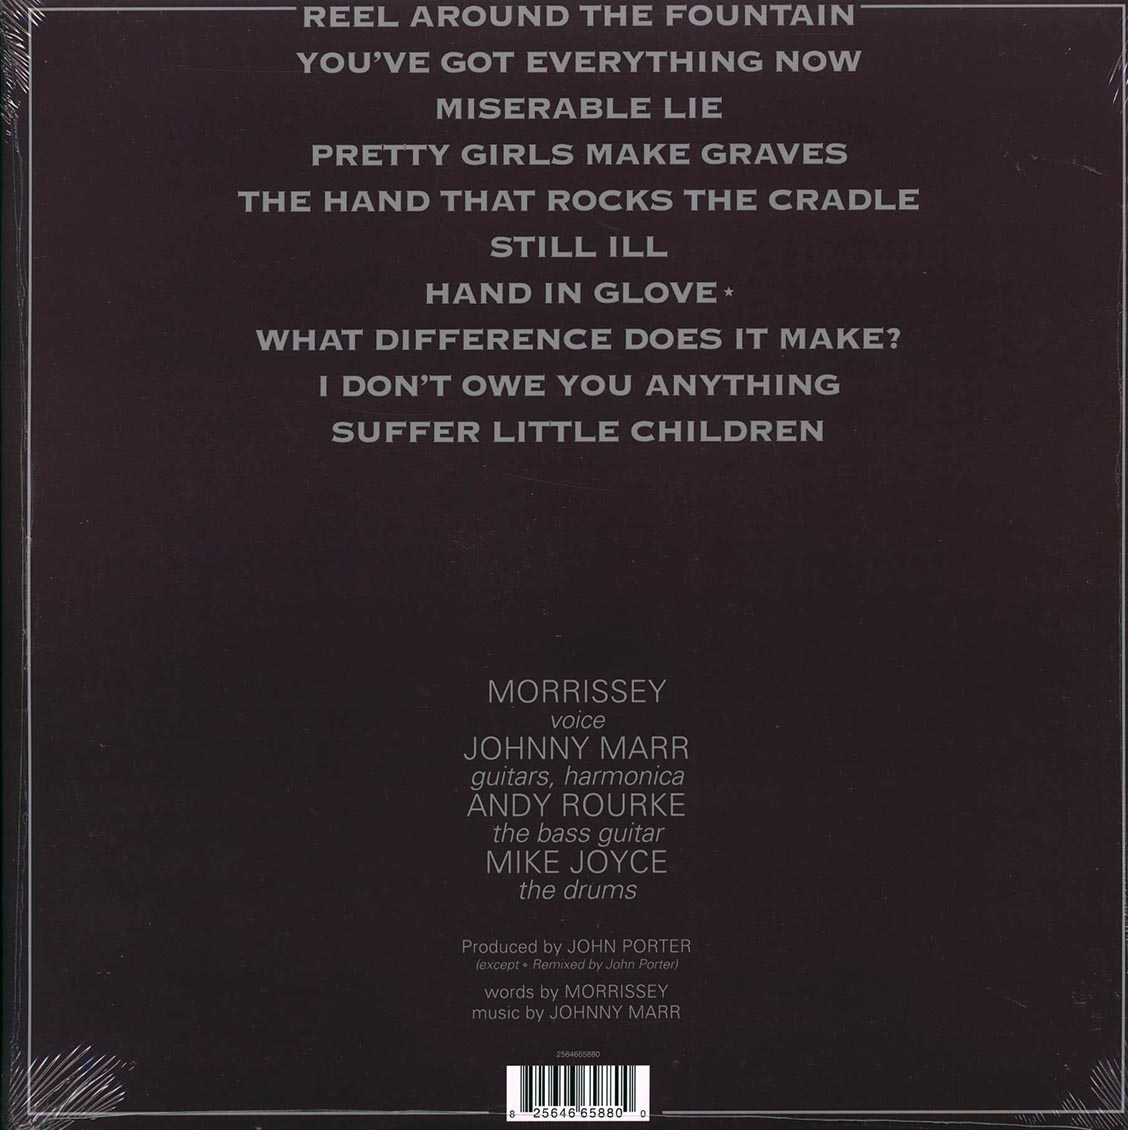 The Smiths - The Smiths (180g) - Vinyl LP, LP